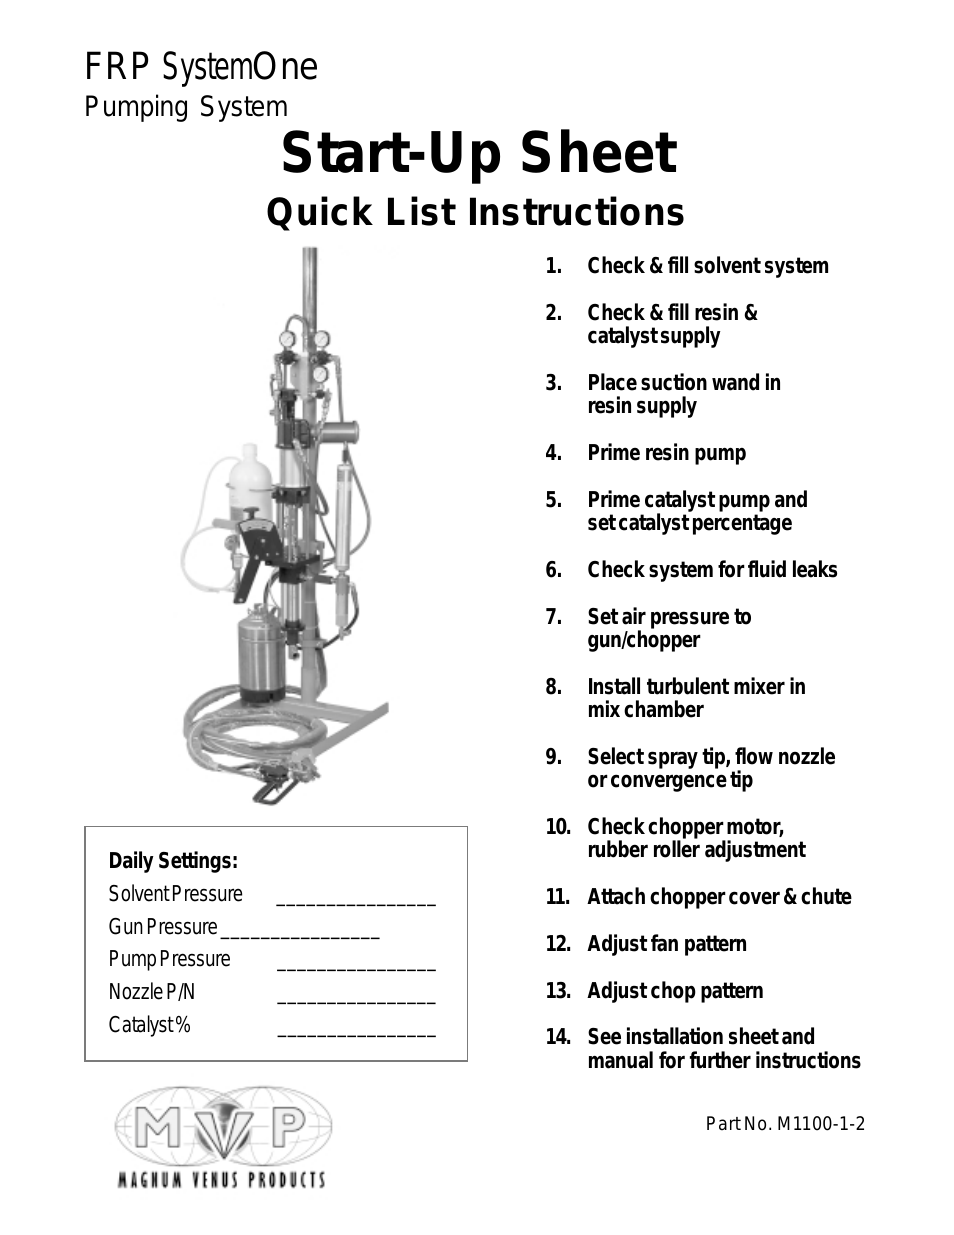 System One FRP Start-Up Sheet Quick List Instructions